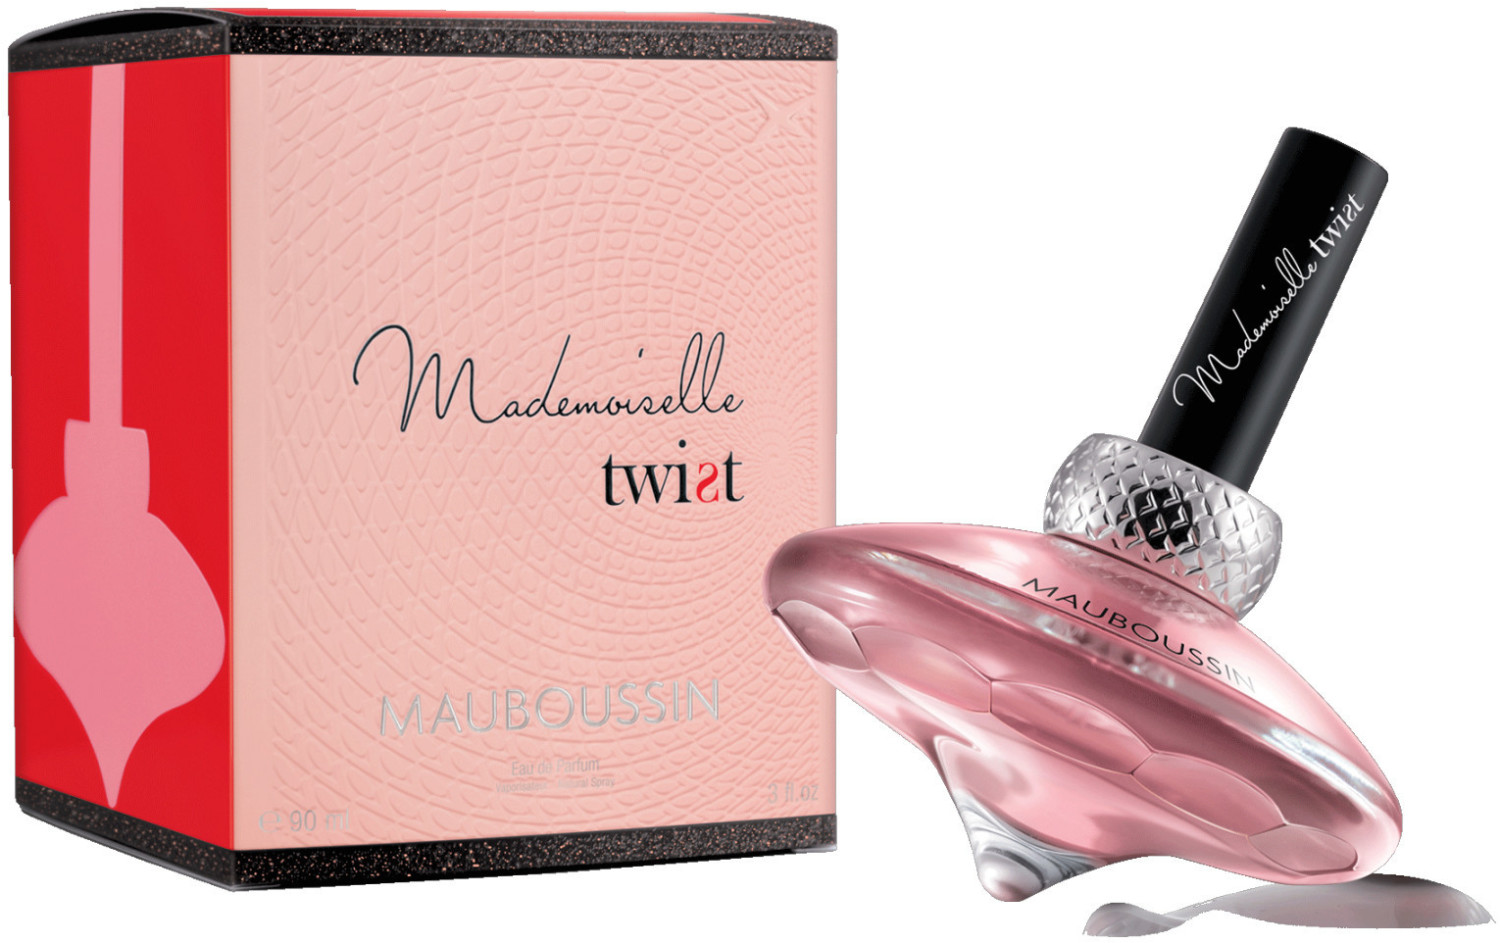 Photos - Women's Fragrance Mauboussin Mademoiselle Twist  (90ml)